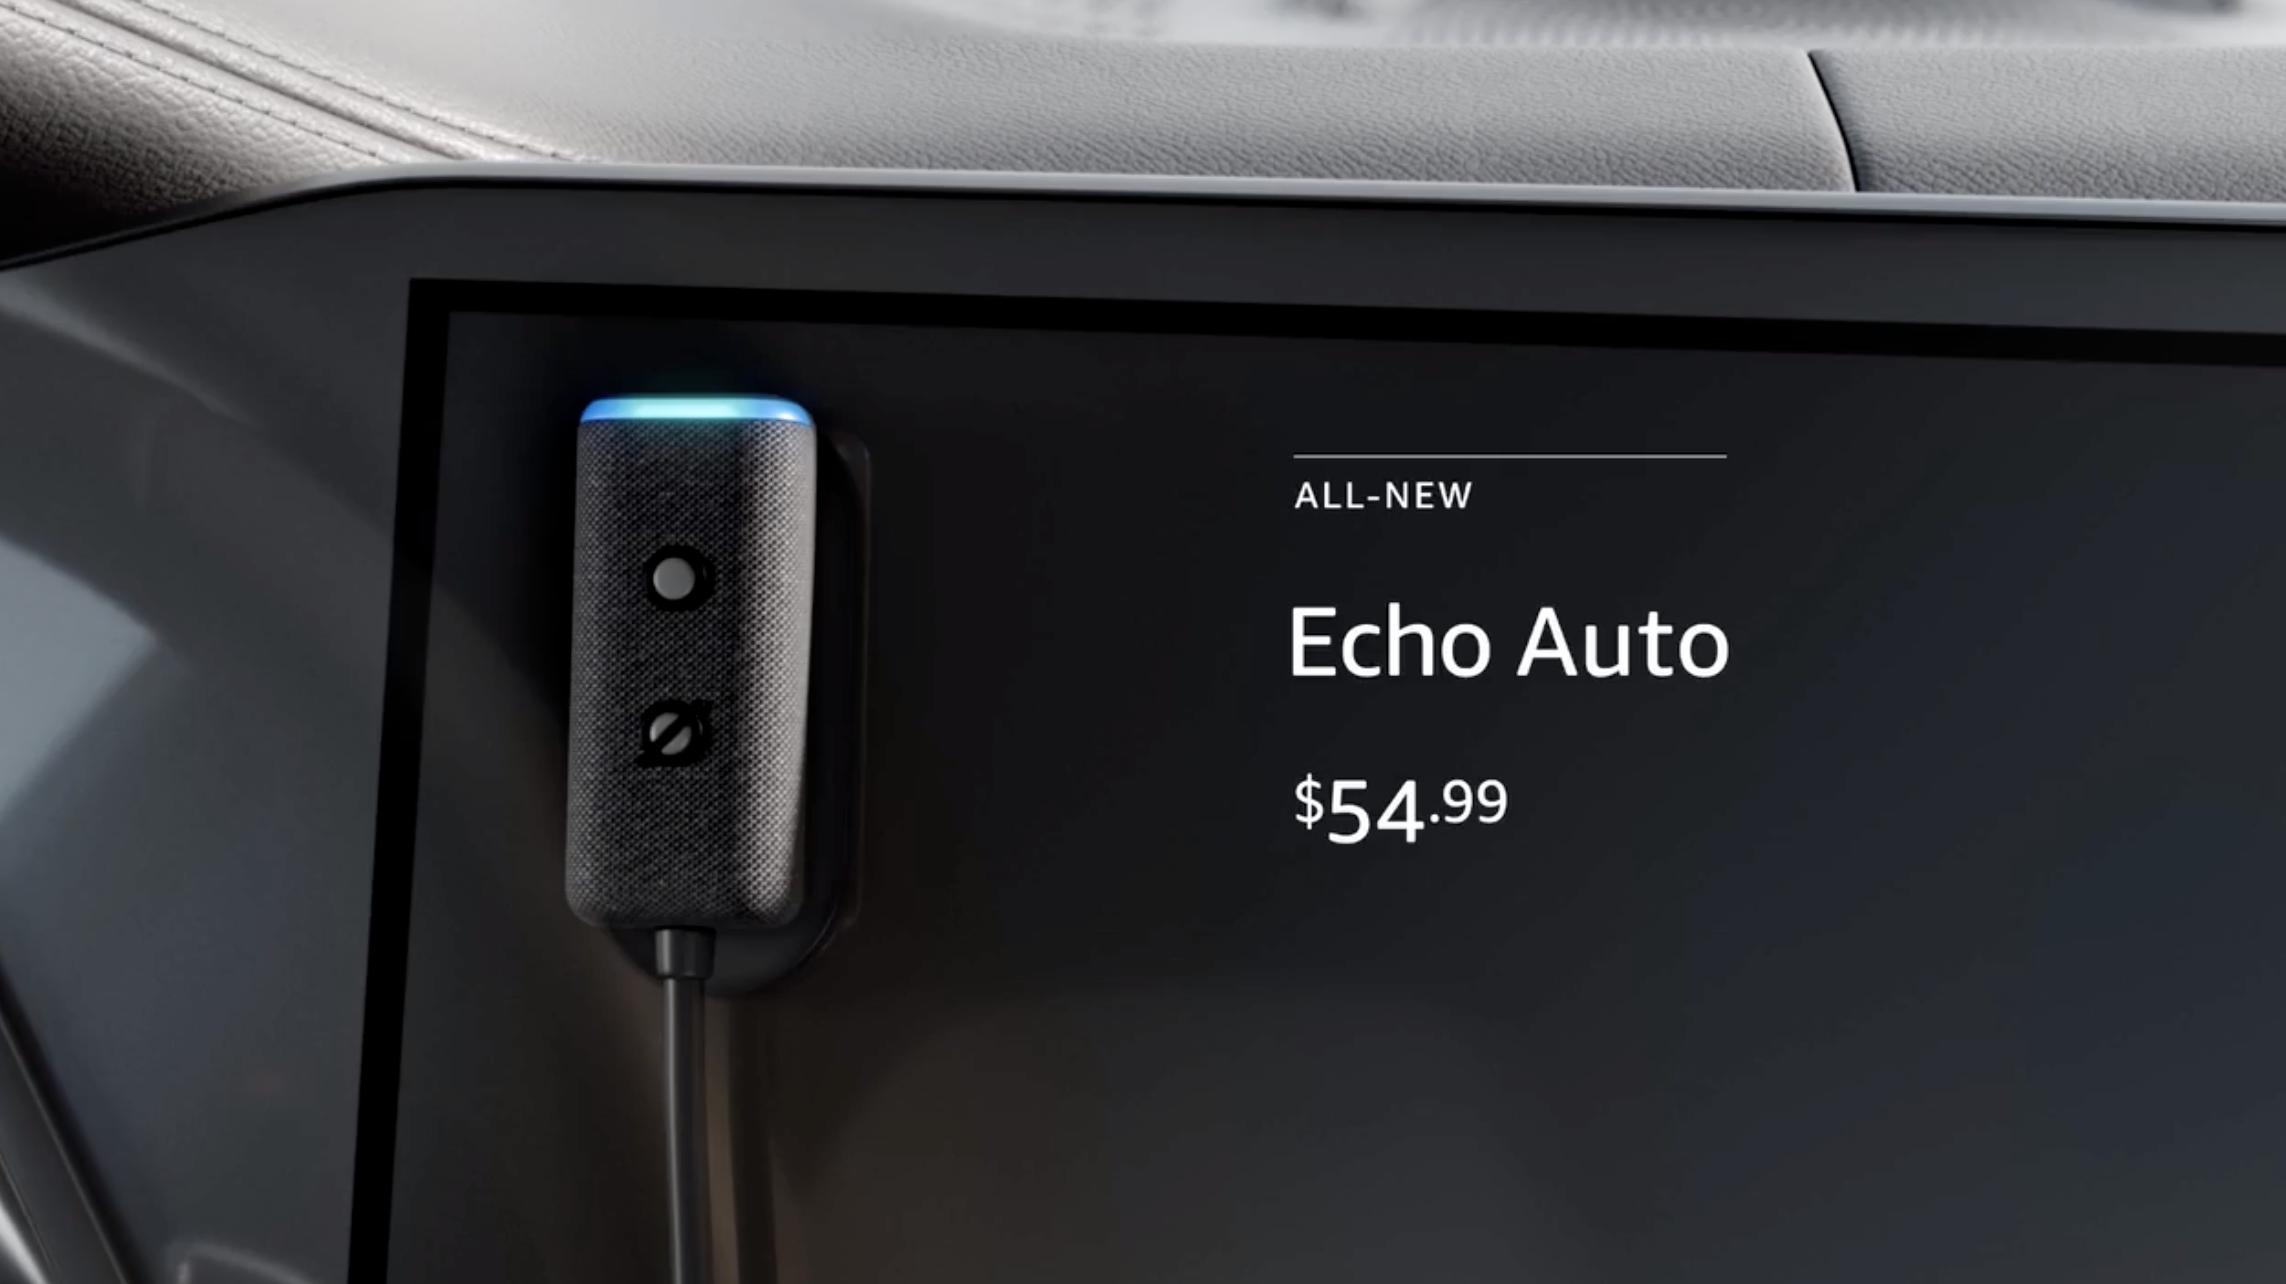 Echo Auto at Amazon Event